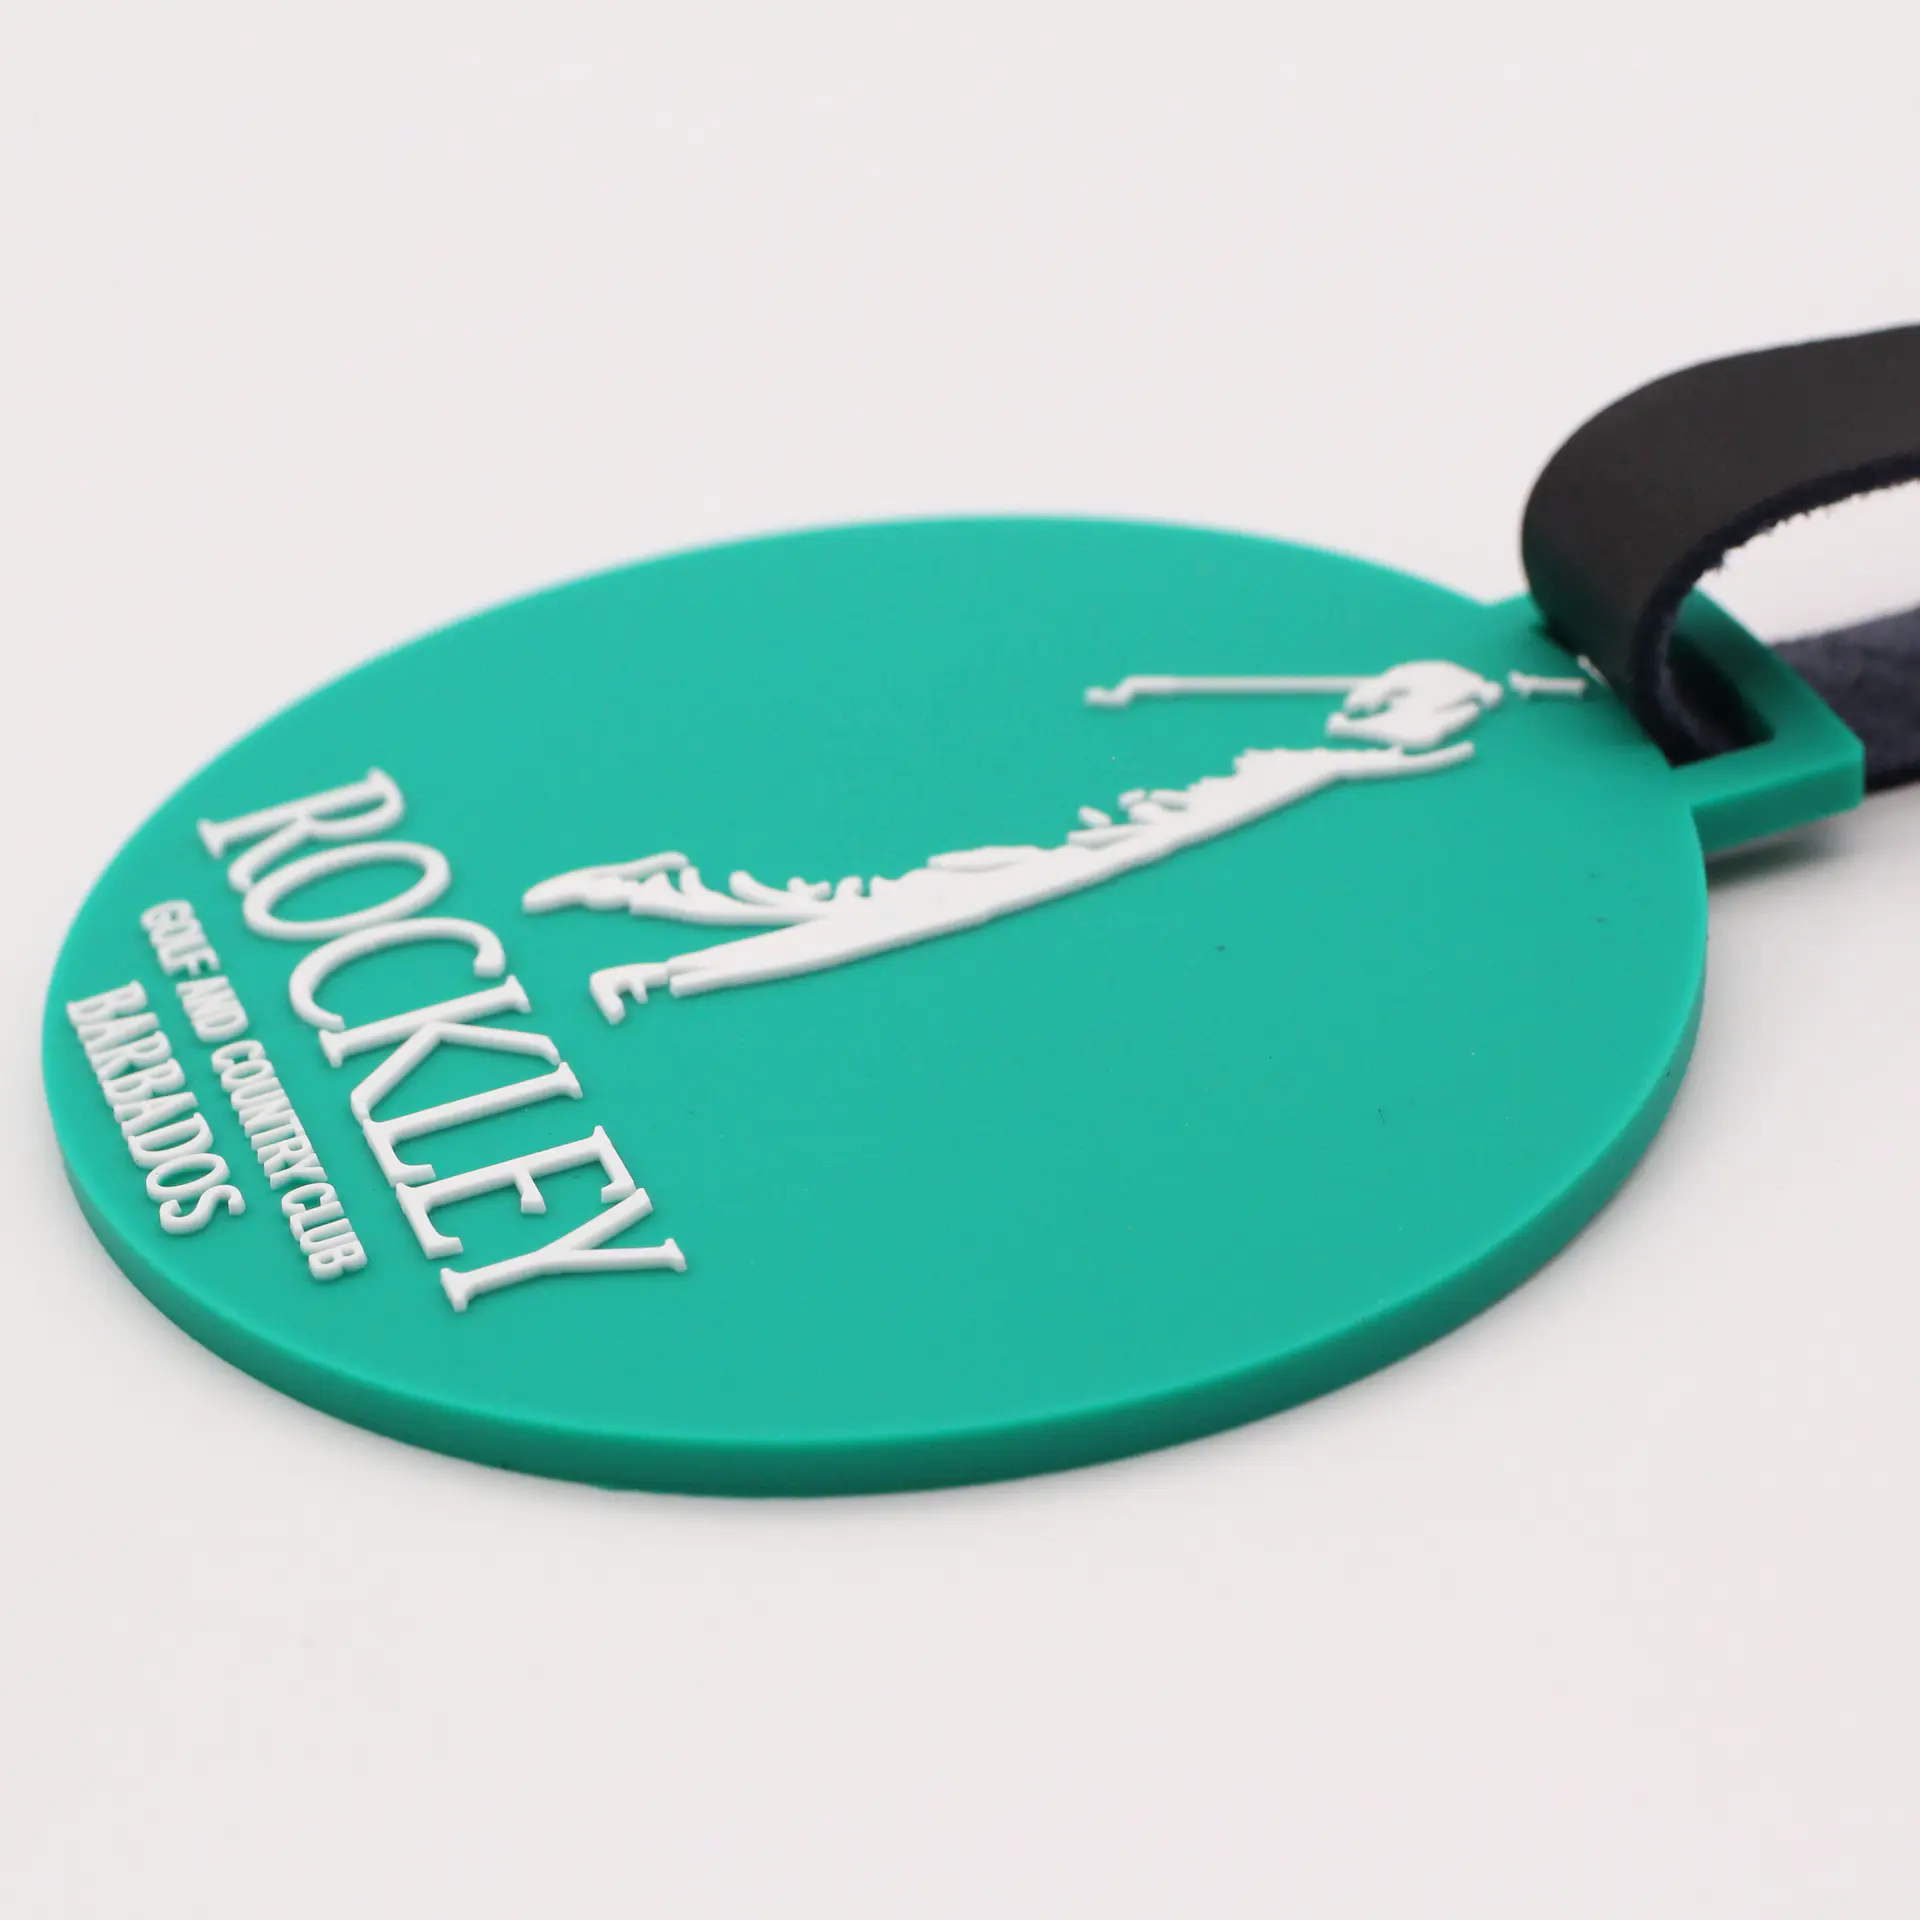 Cheap promotional custom round pvc golf bag tag